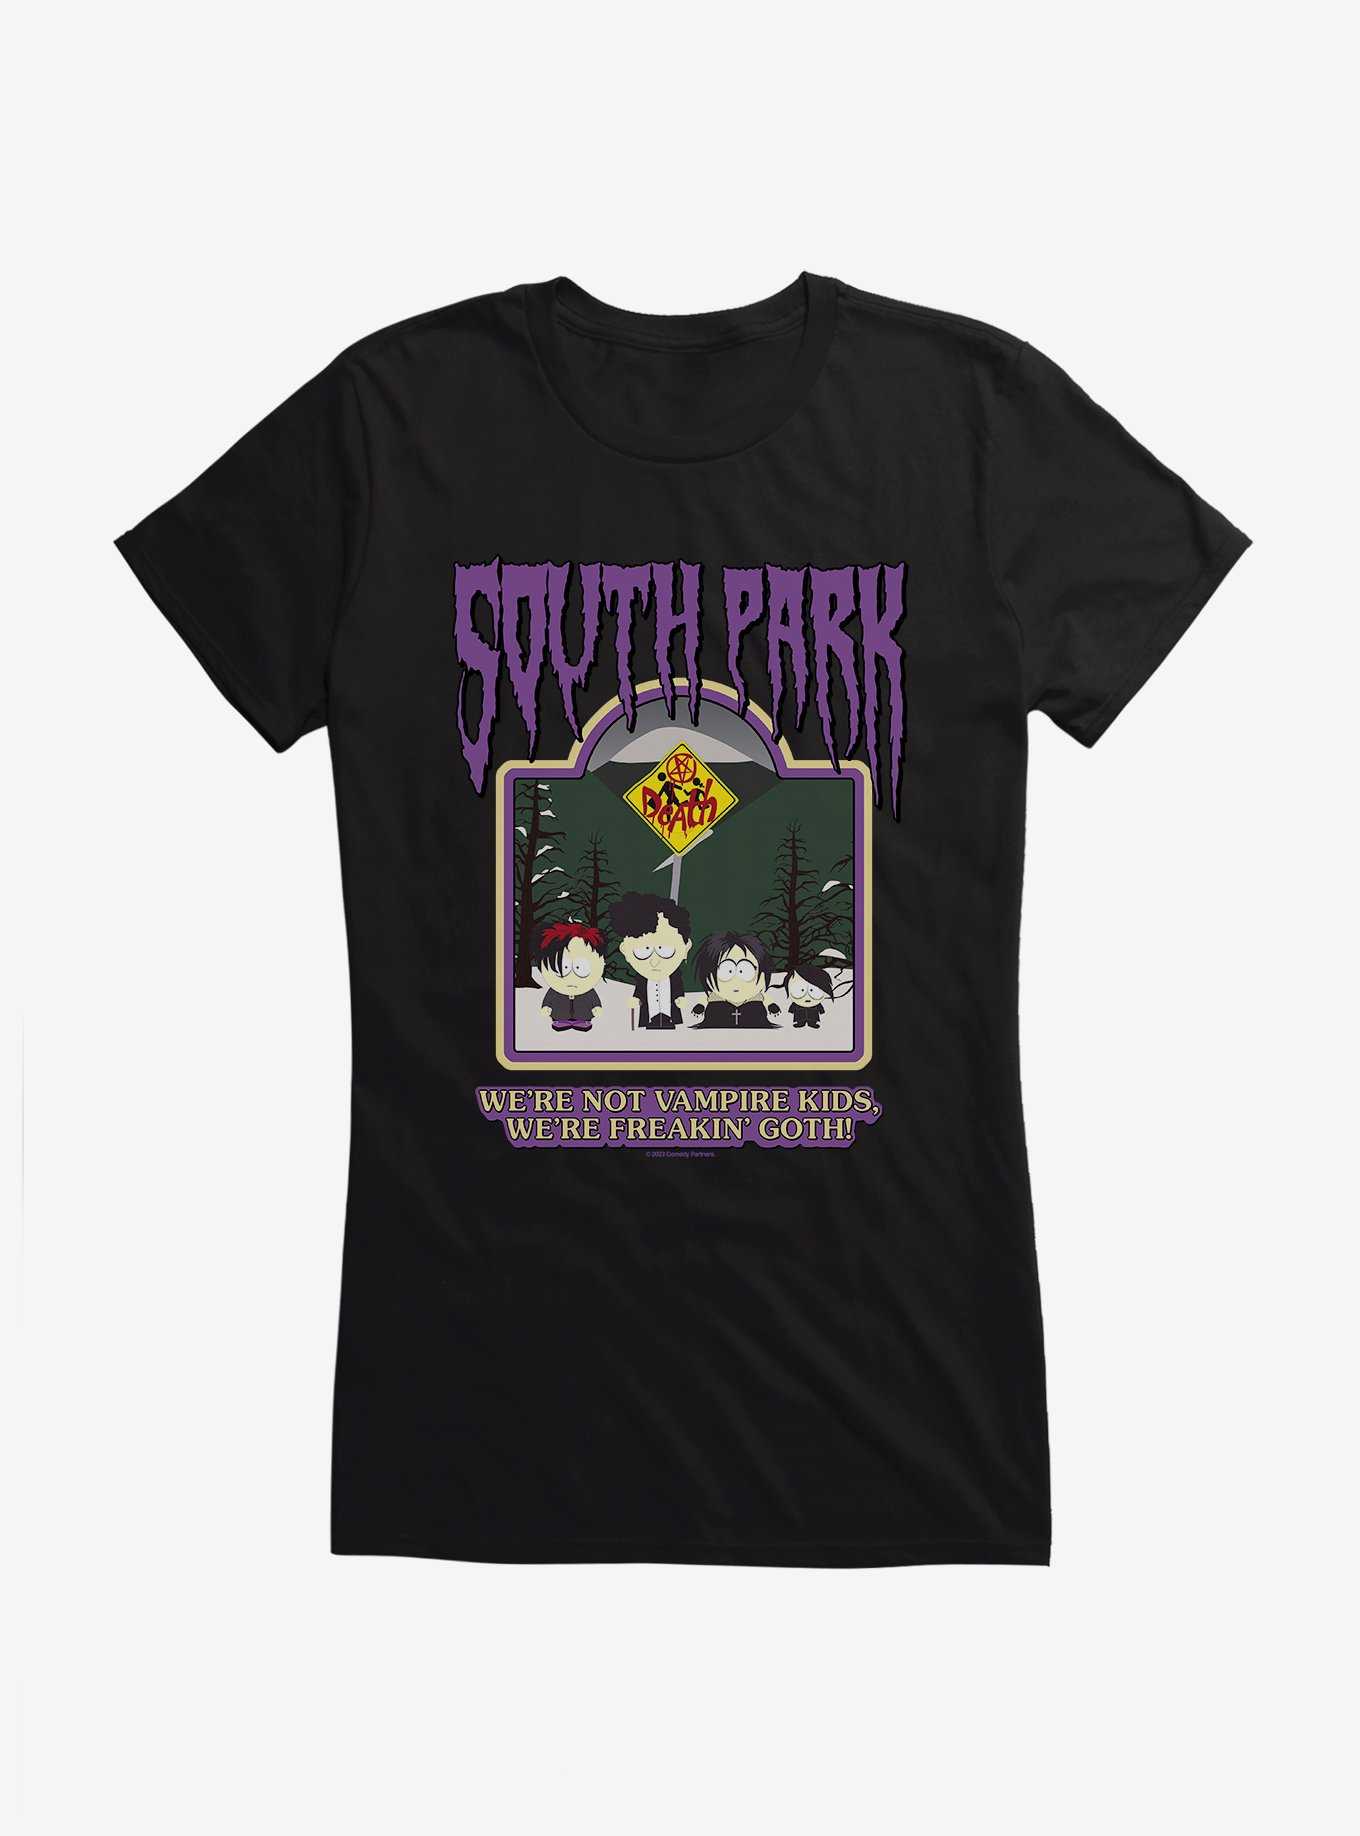 South Park We're Freakin Goth! Girls T-Shirt, , hi-res